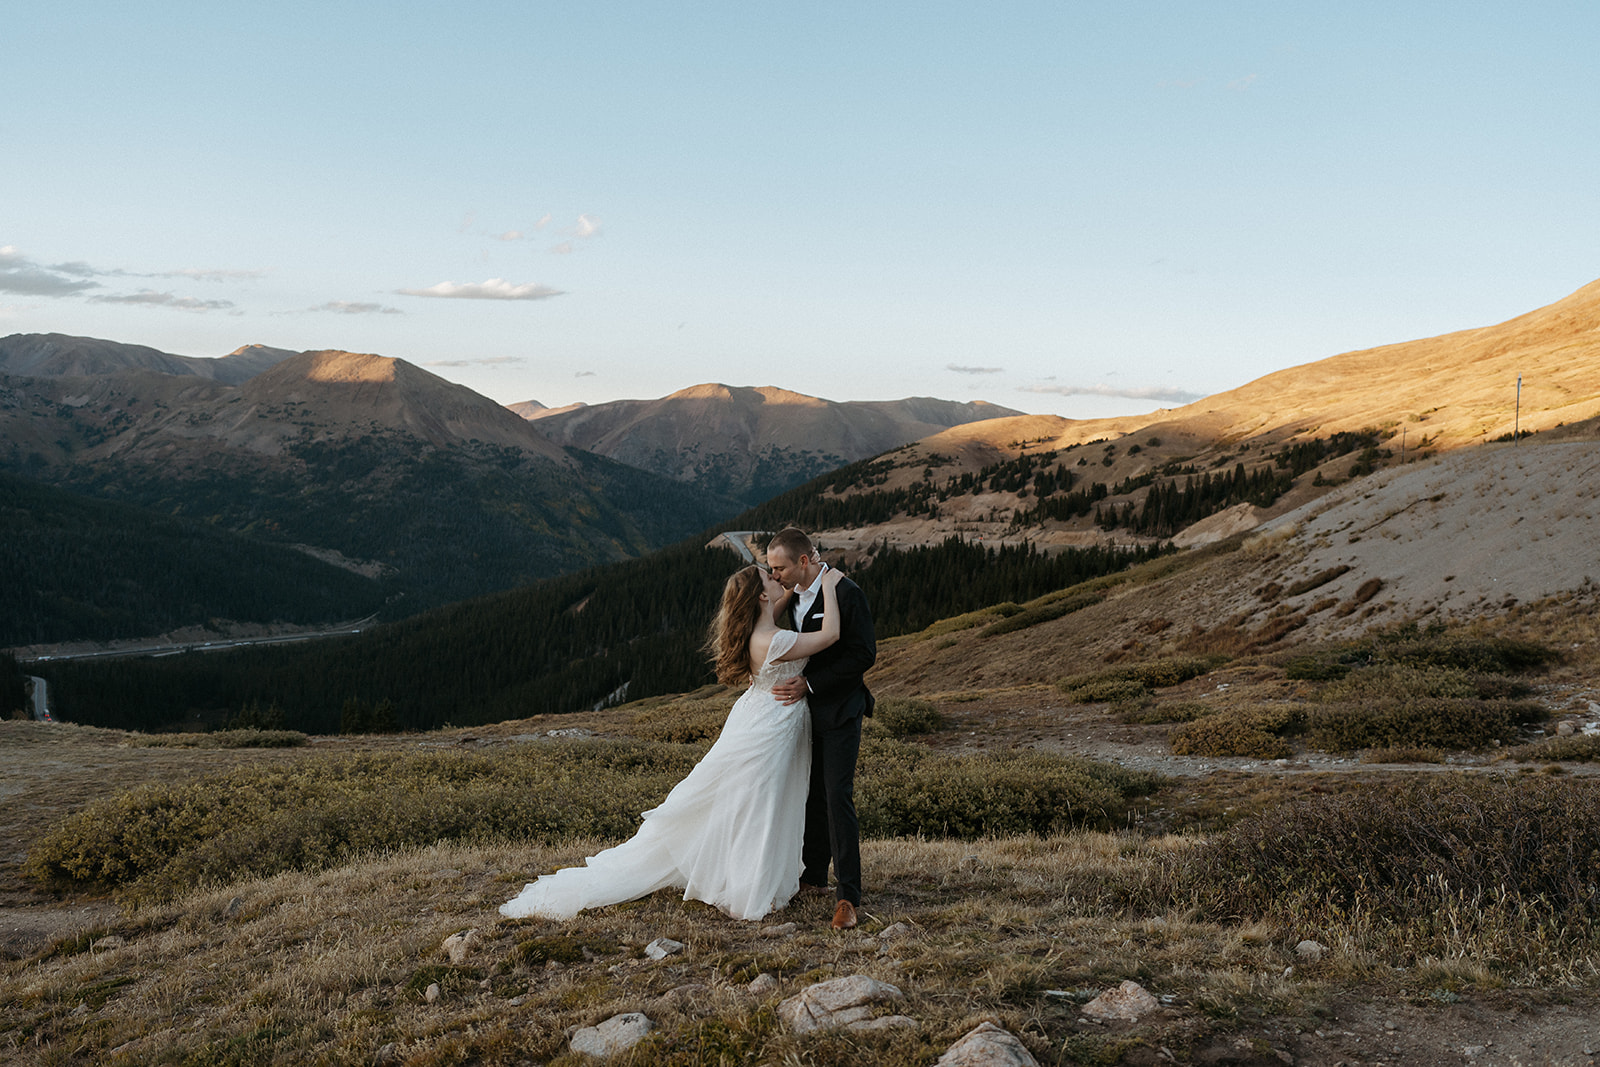 Newlyweds kiss on a mountainside at sunset